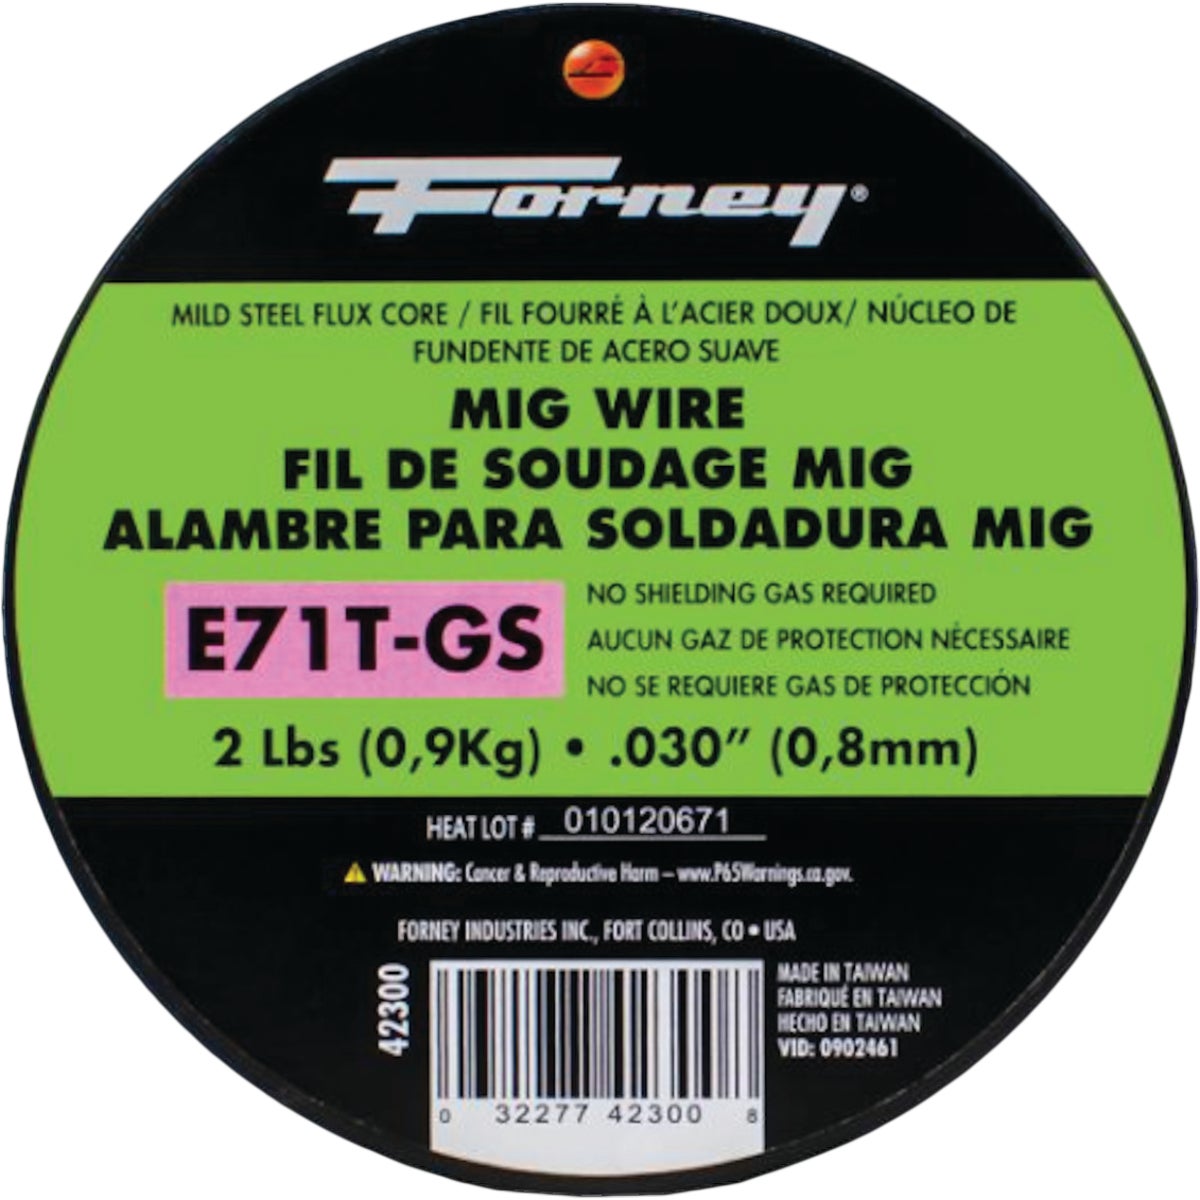 Item 366285, E71T-GS flux core MIG (GMAW) welding wire for mild steel is a self-shielded